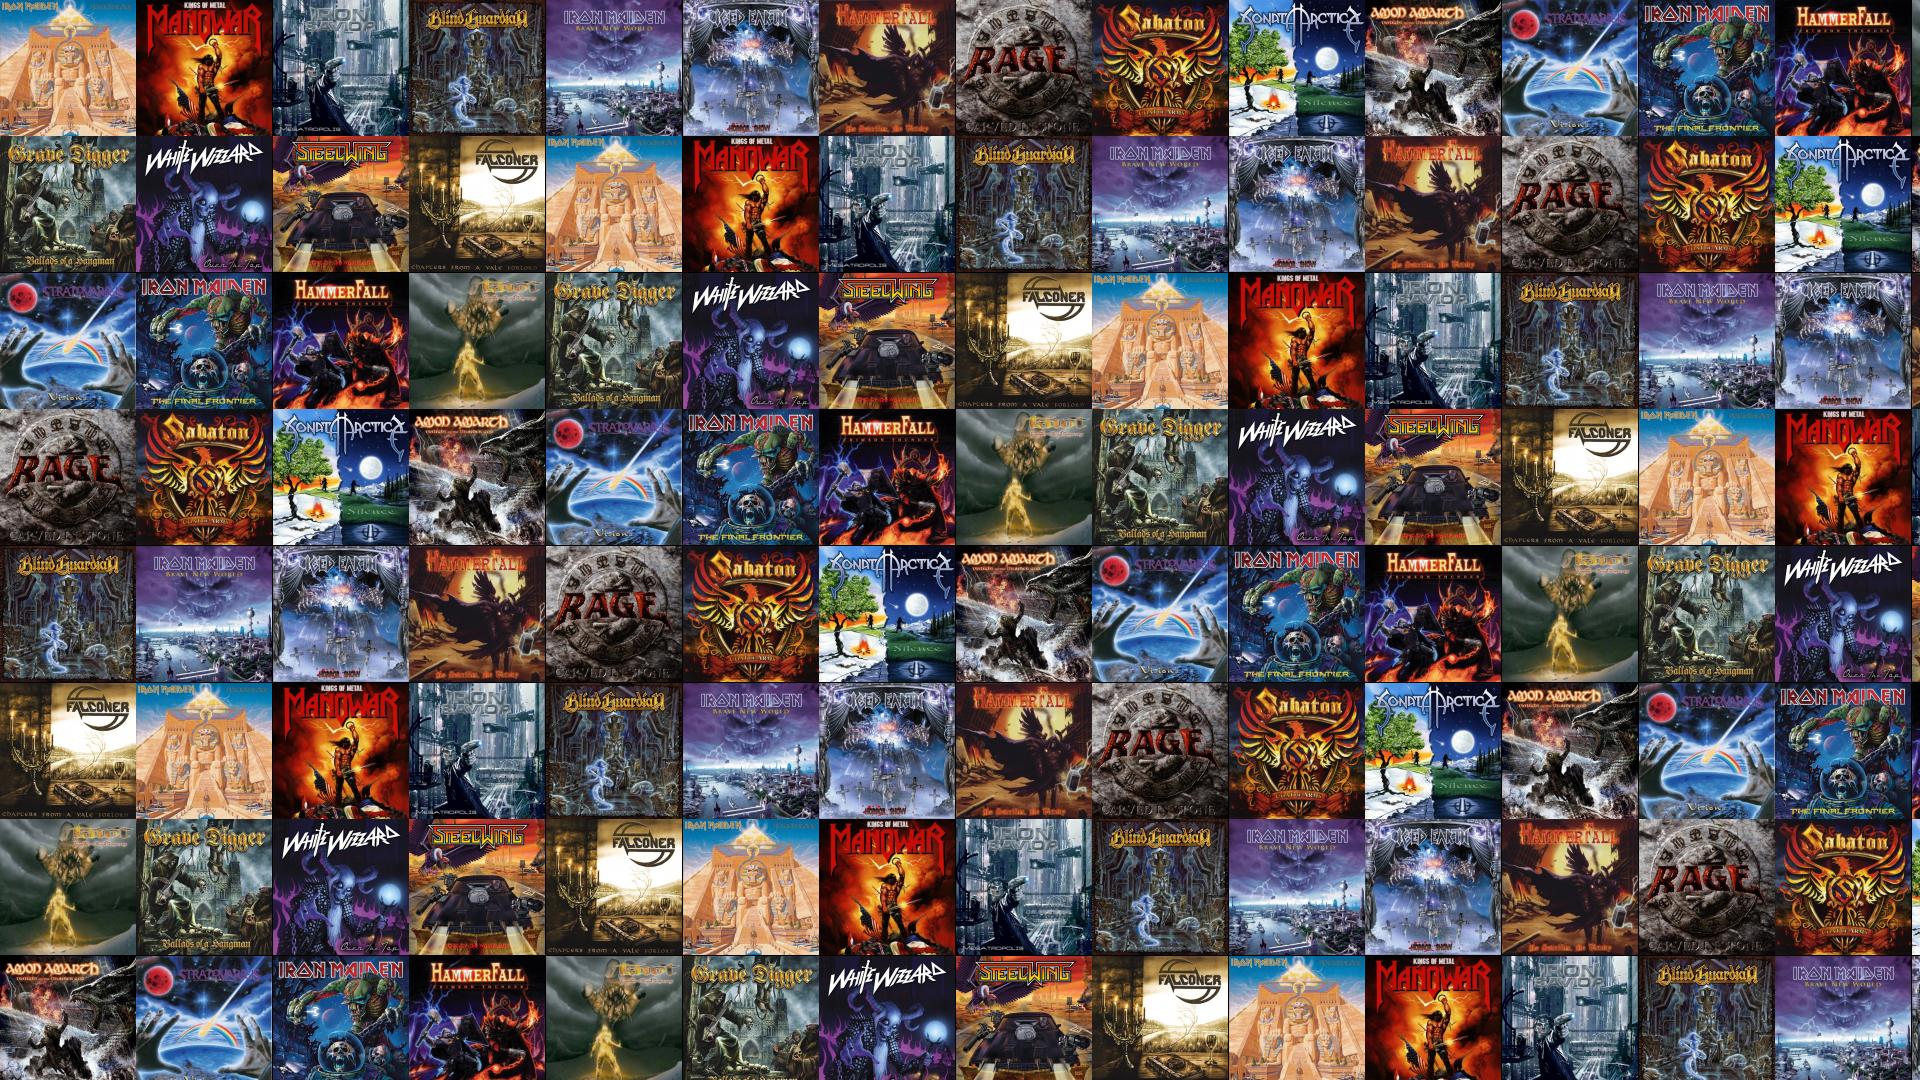 Music Heavy Metal HD Wallpaper | Background Image